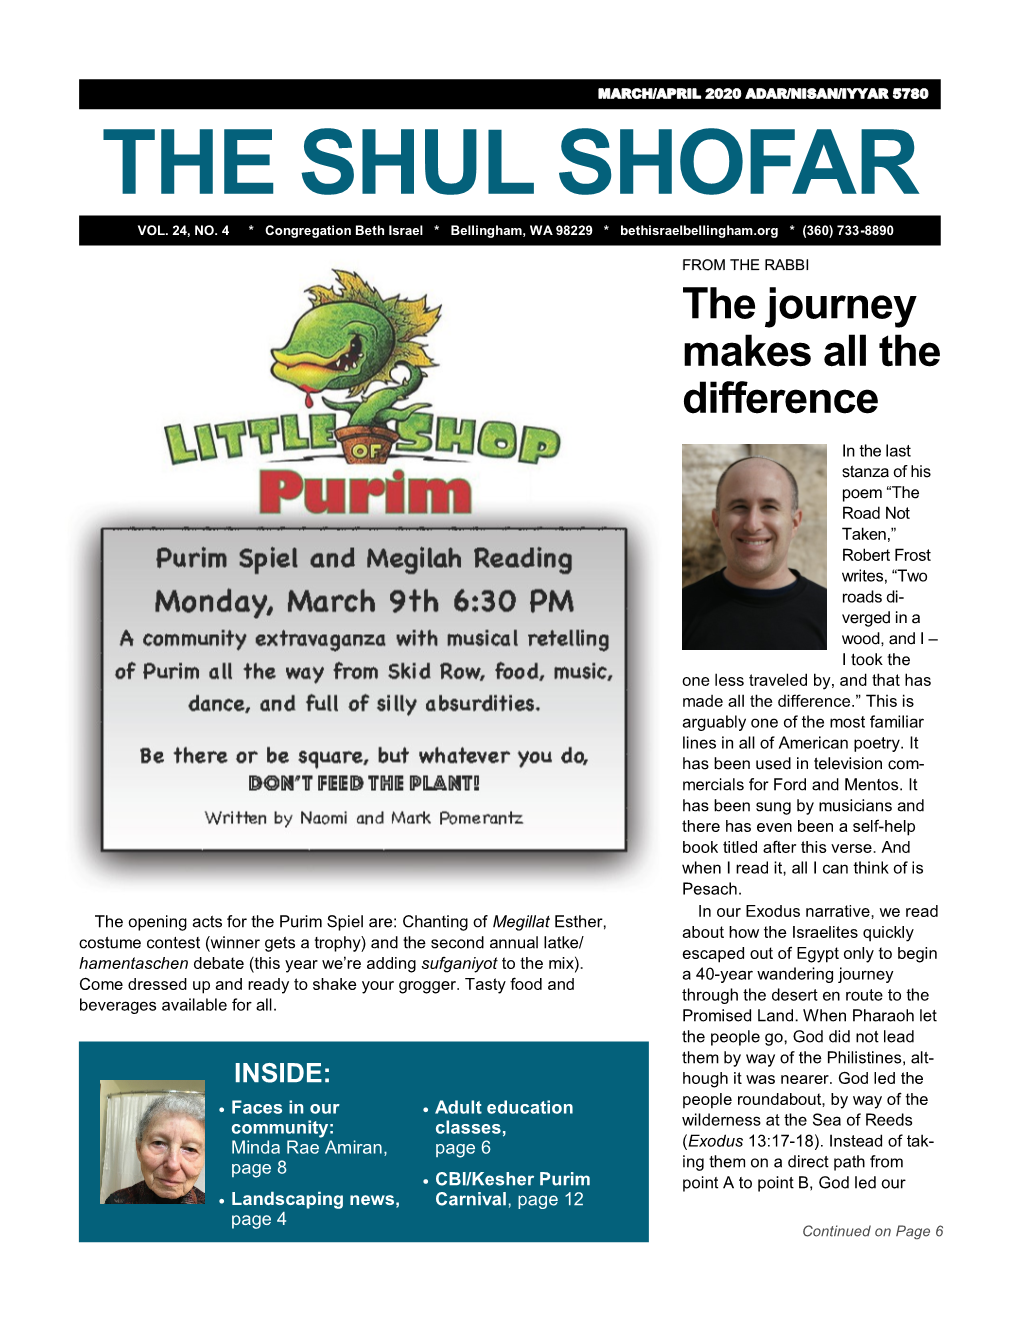 The Shul Shofar, March/April 2020